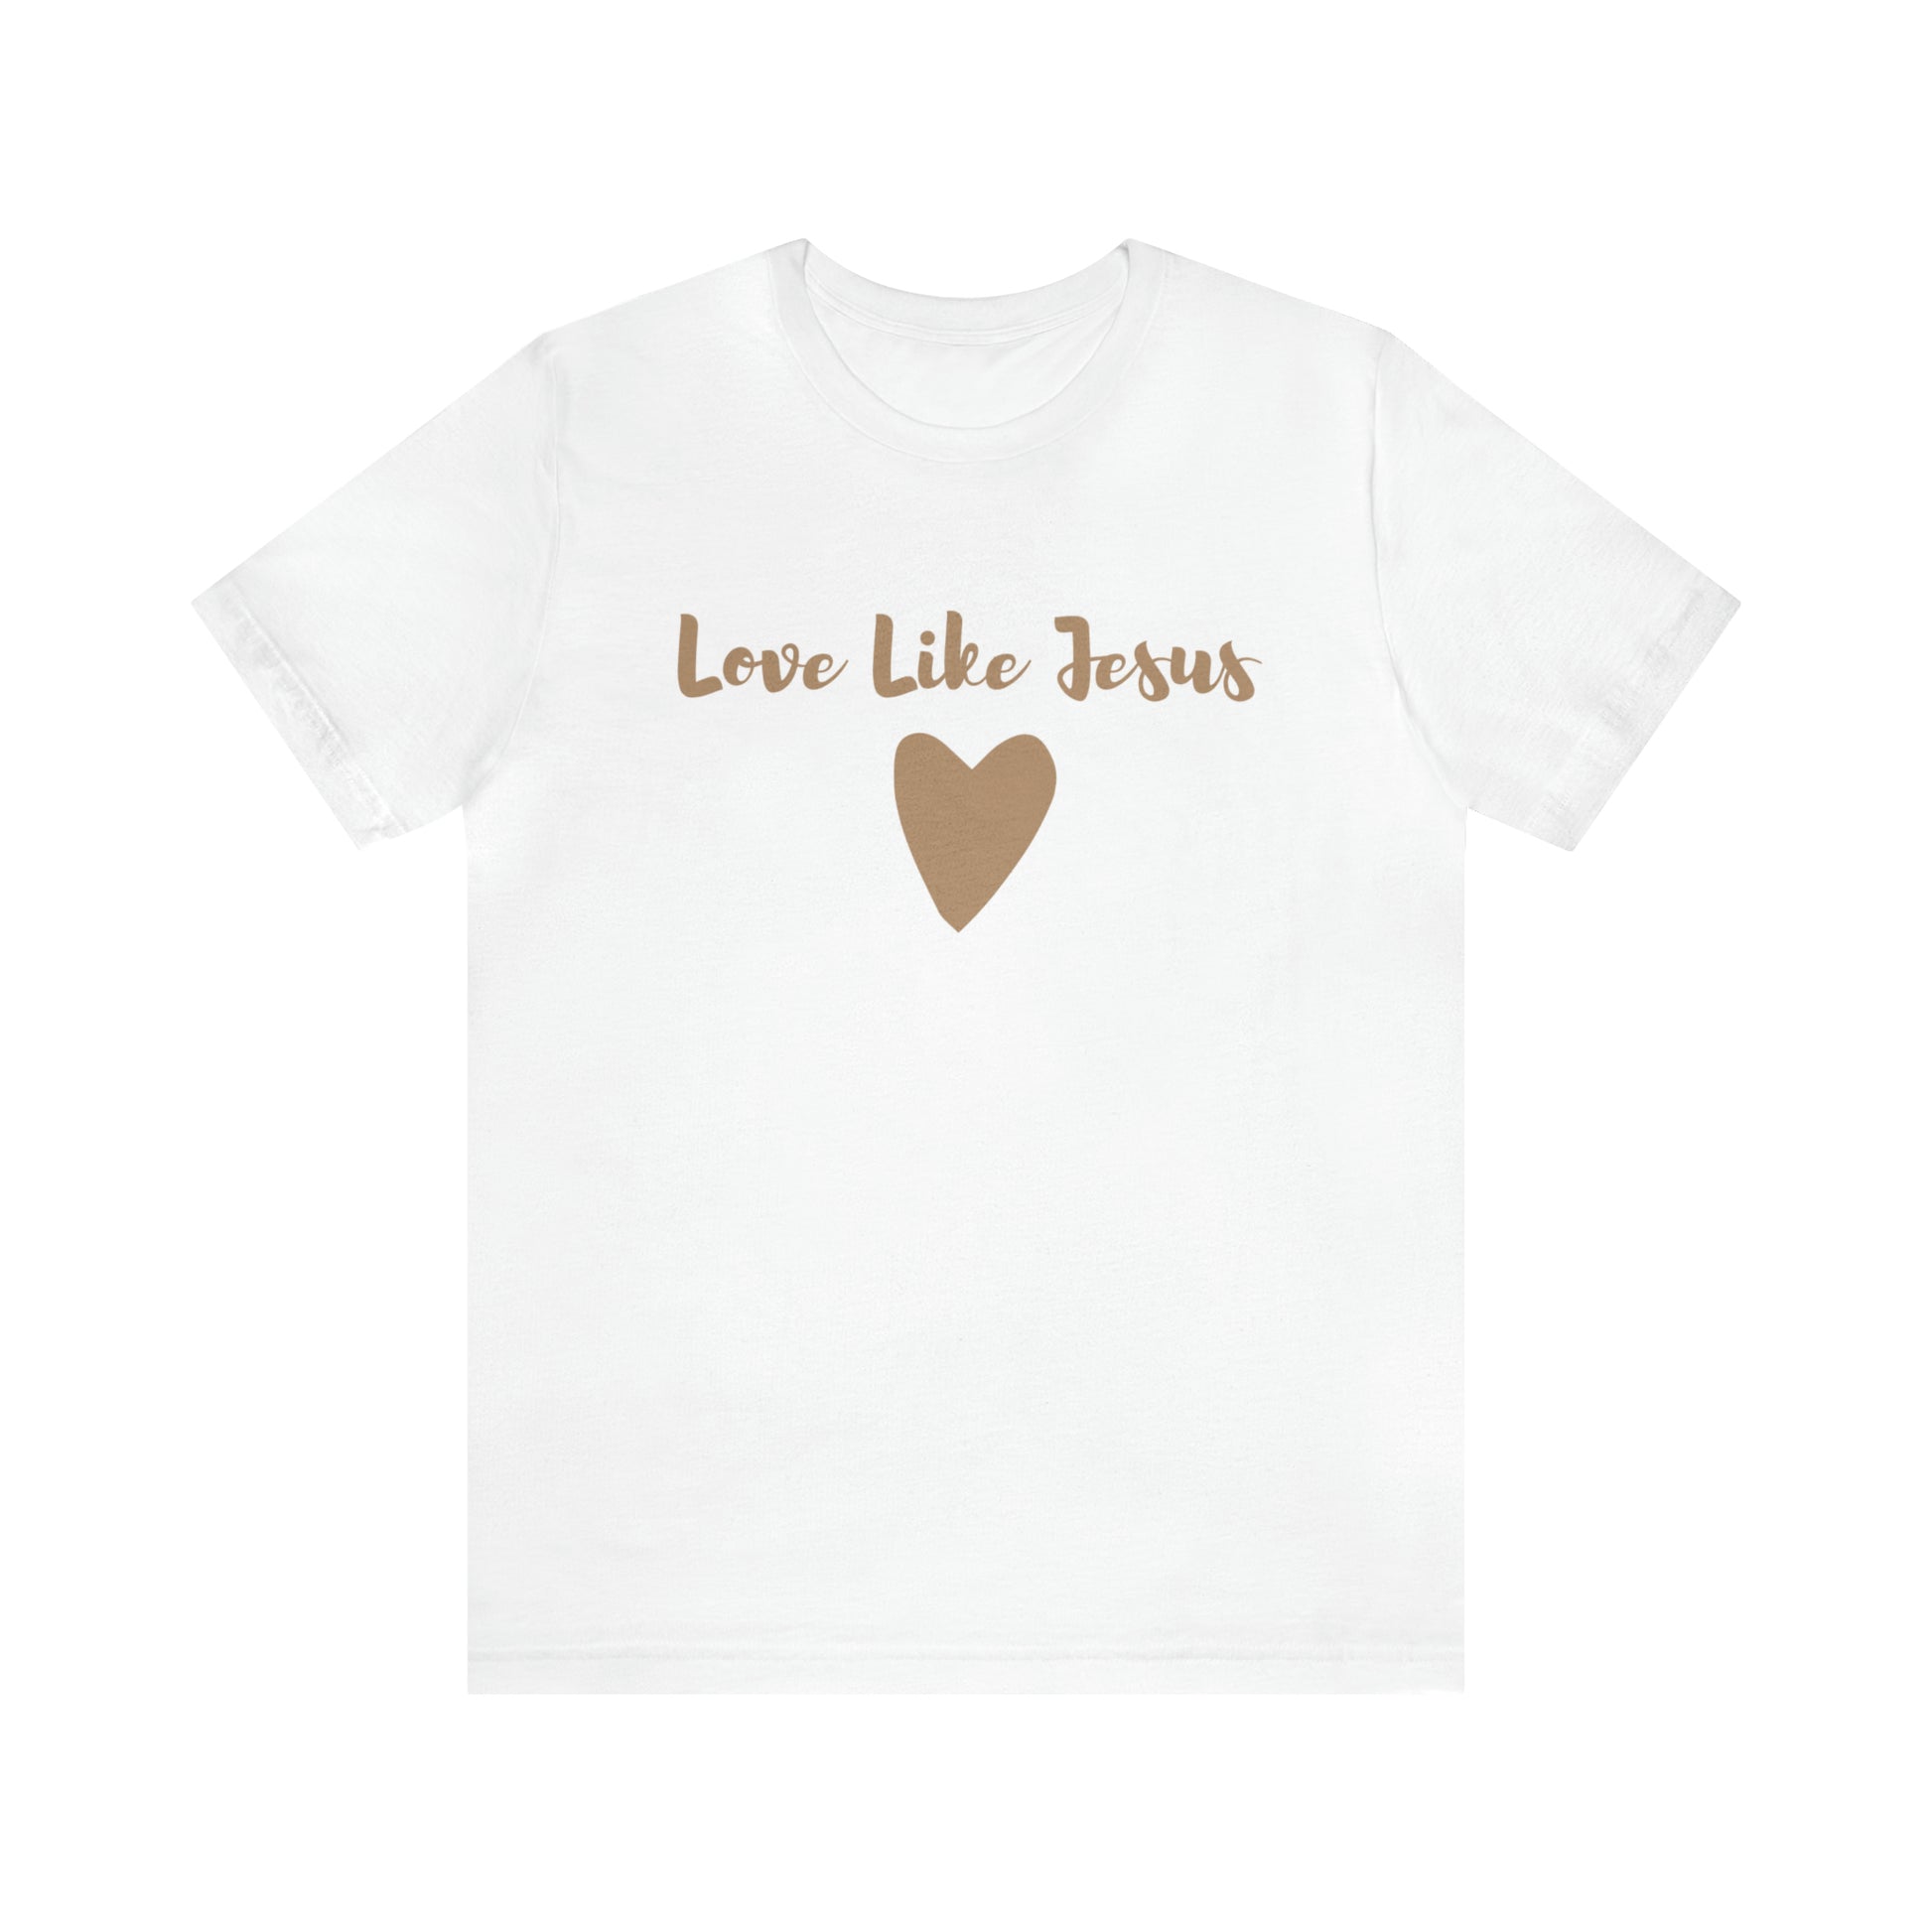 Love Like Jesus Tee Shirt - Friends of the Faith